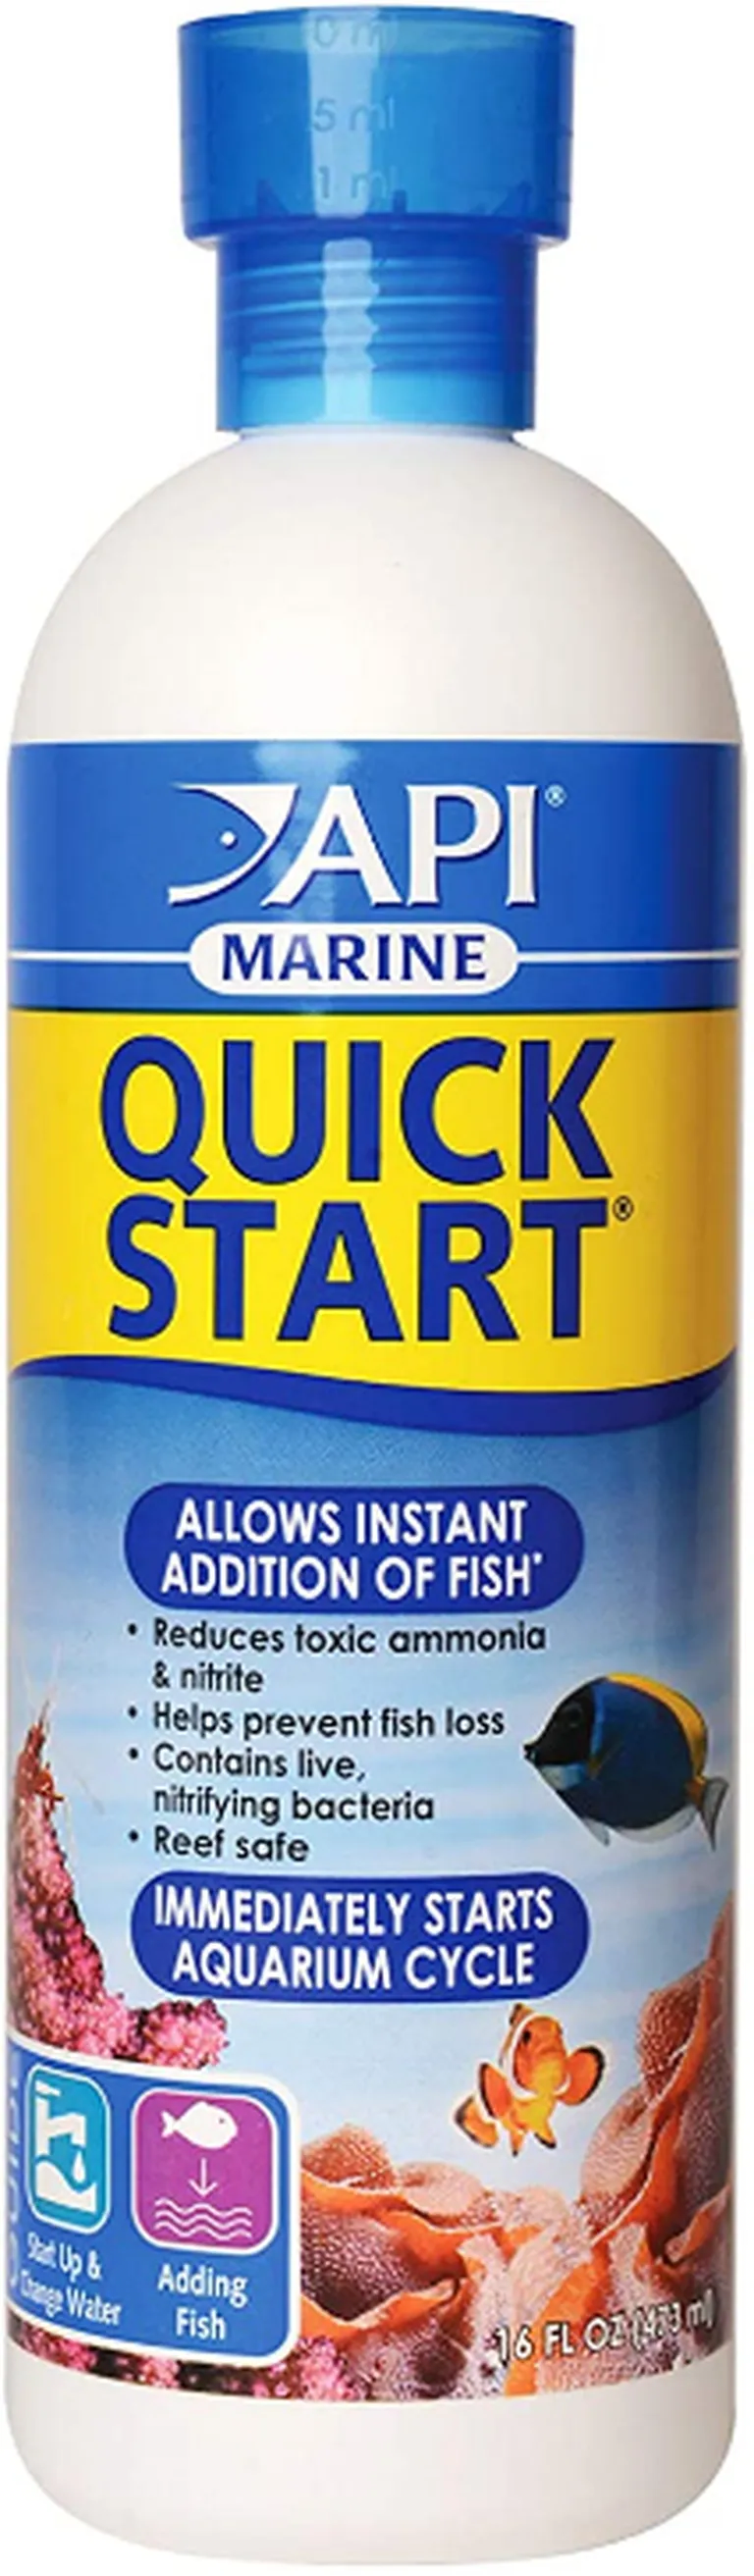 API Marine Quick Start Allows Instant Addition of Fish Photo 1